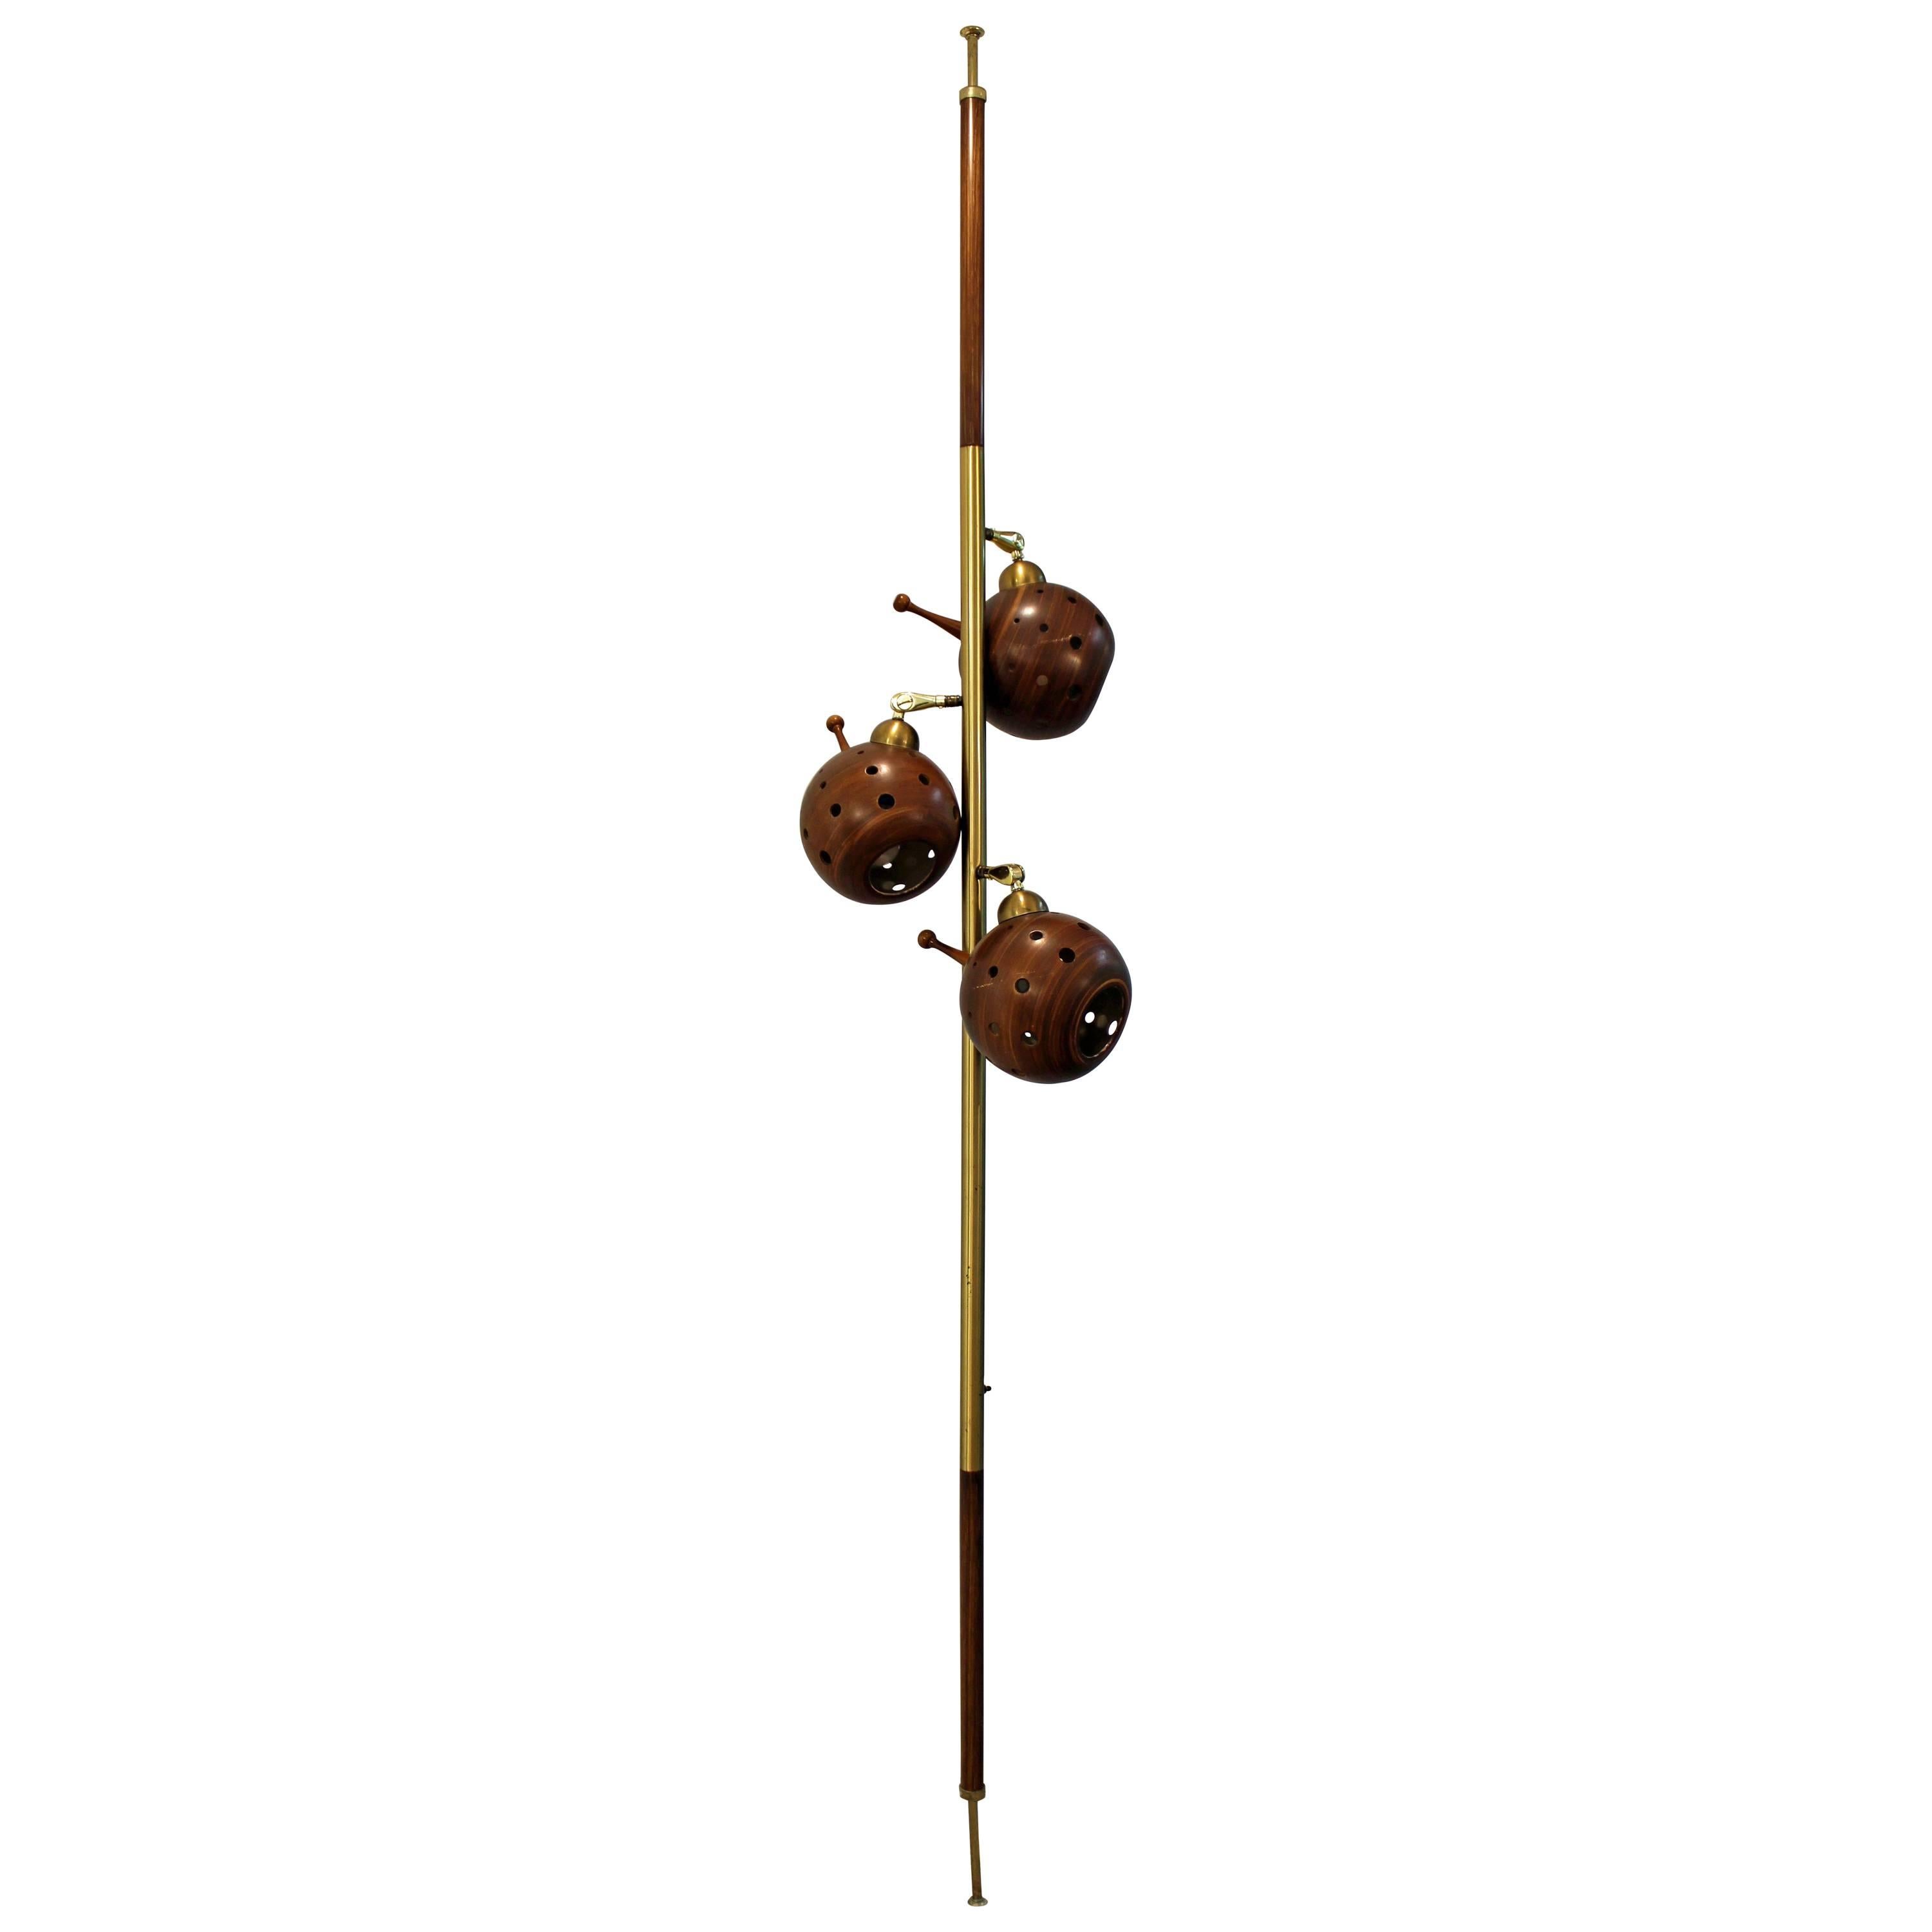 Midcentury Danish Modern Walnut Brass Three-Way Tension Pole Lamp